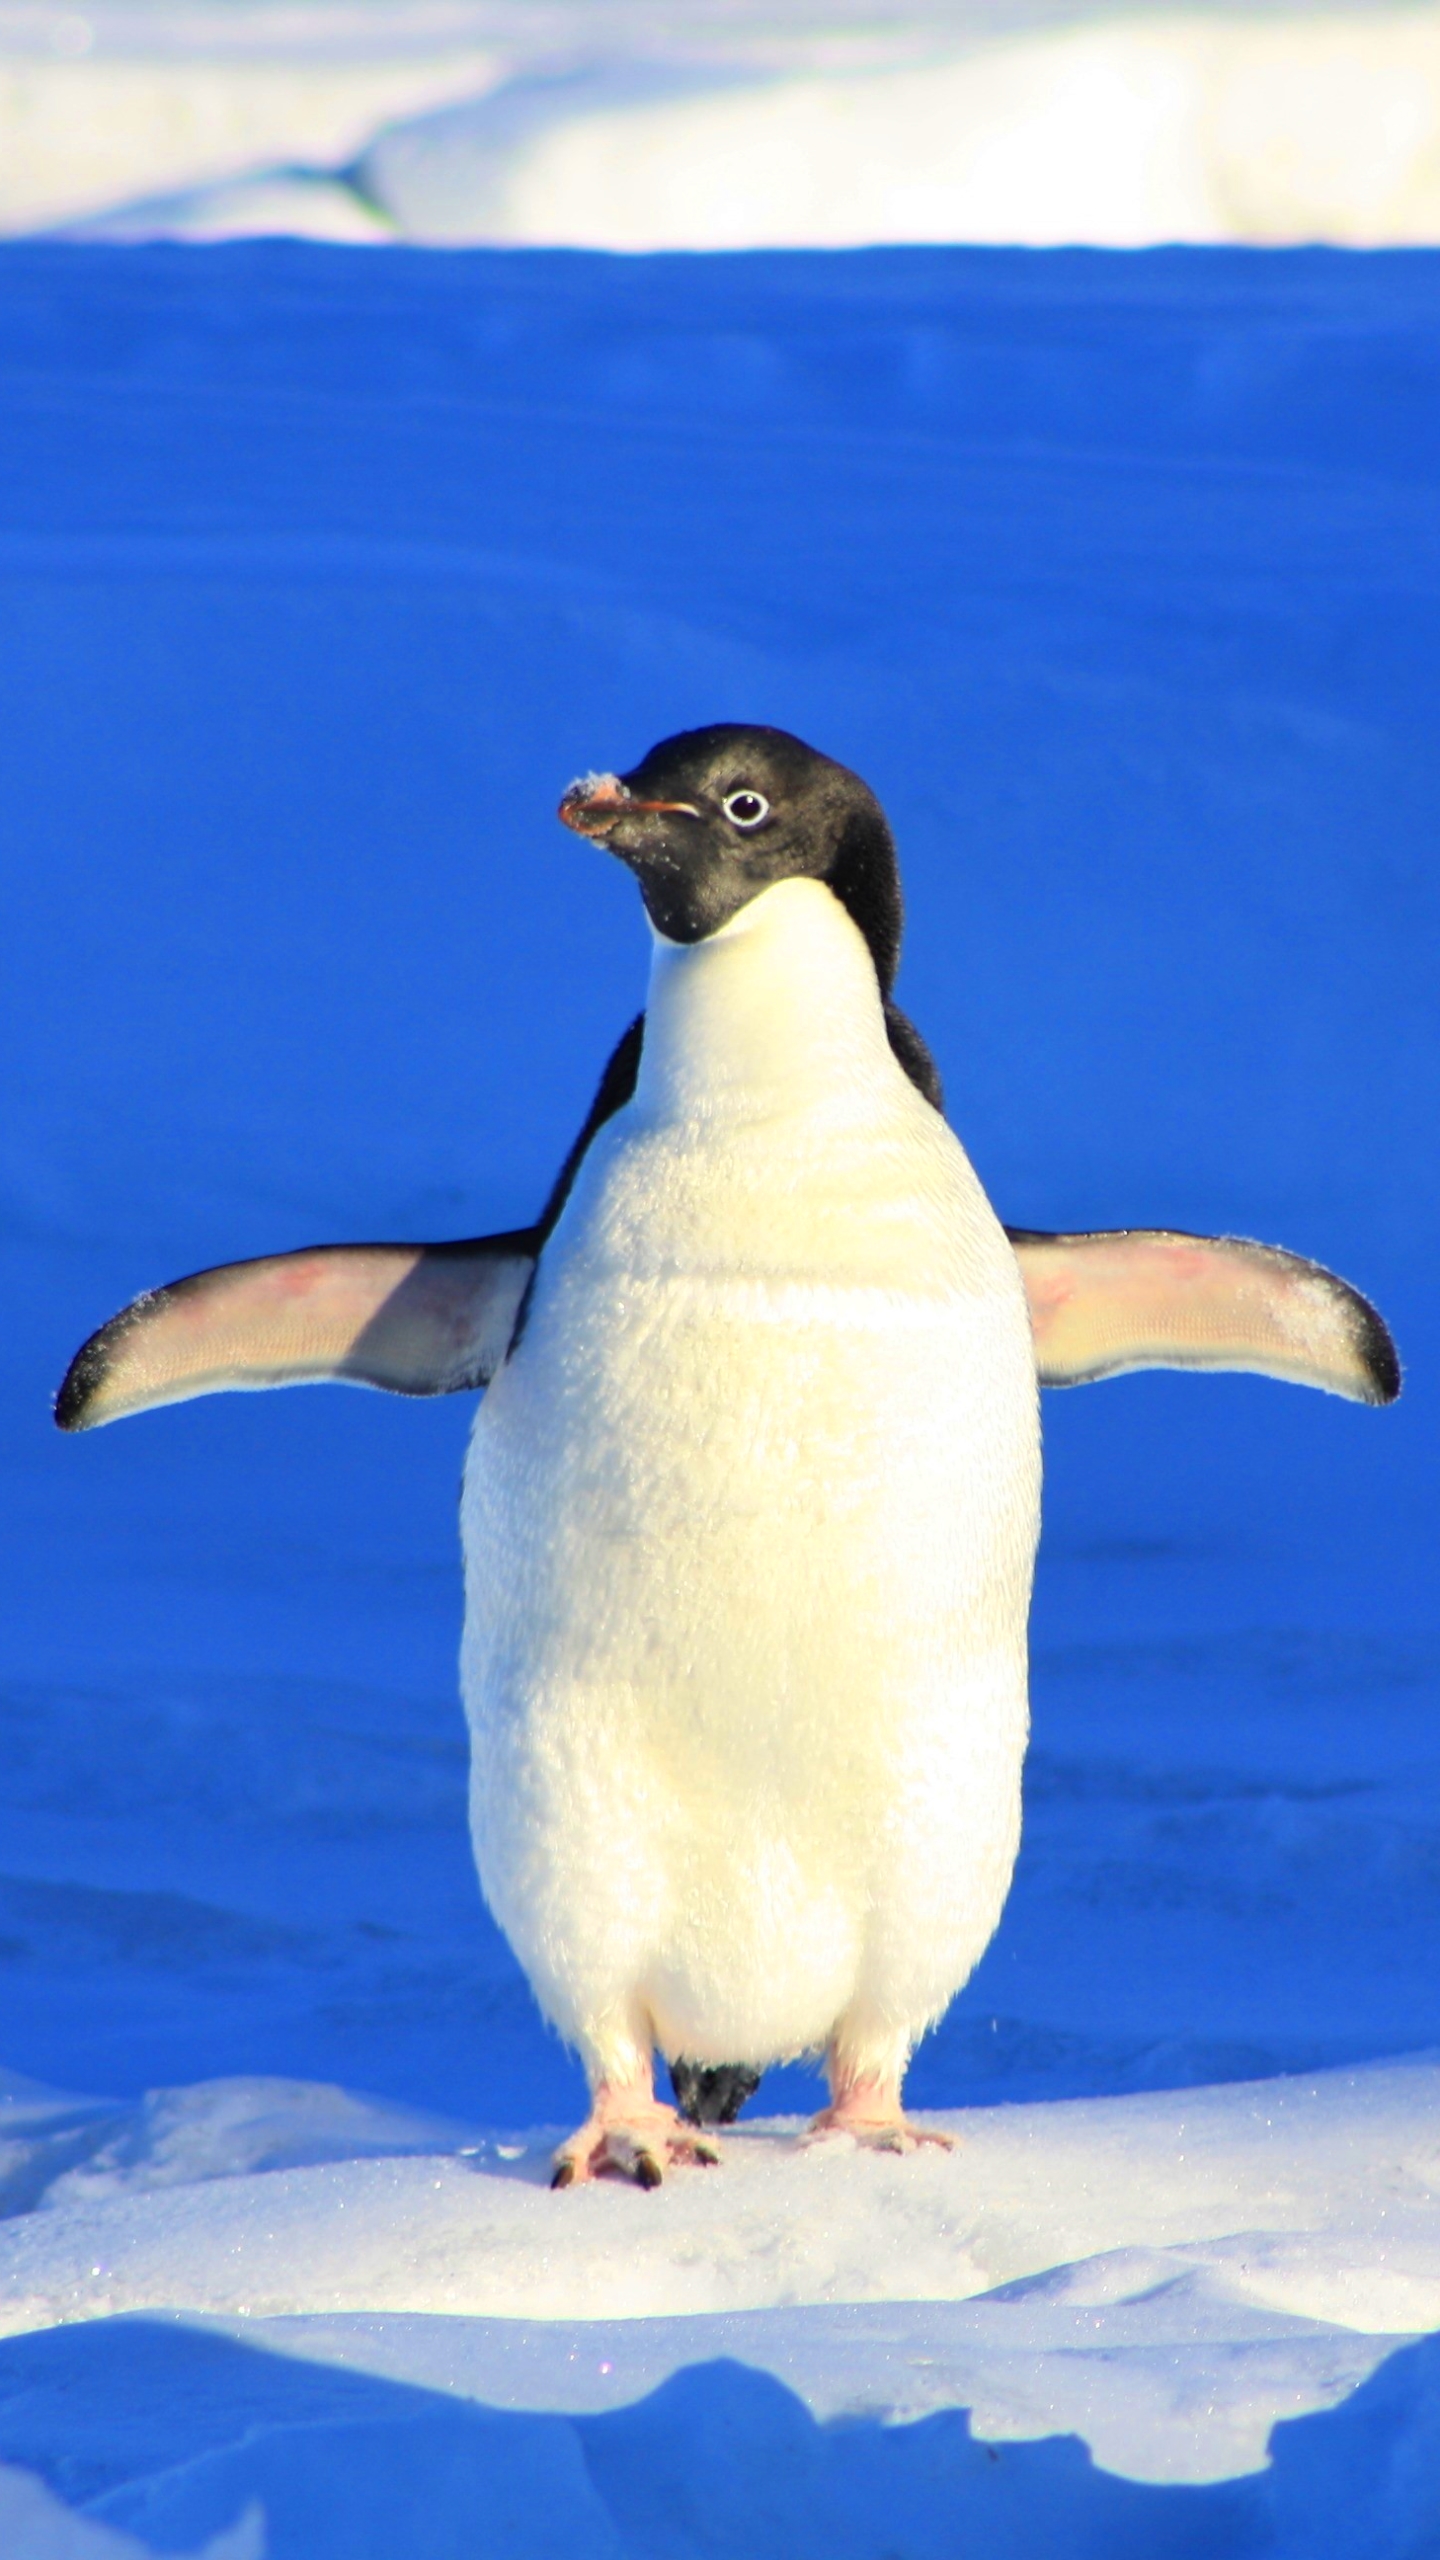 Descarga gratis la imagen Animales, Nieve, Pingüino, Aves, Bebe Animal, Pingüino Adelia en el escritorio de tu PC